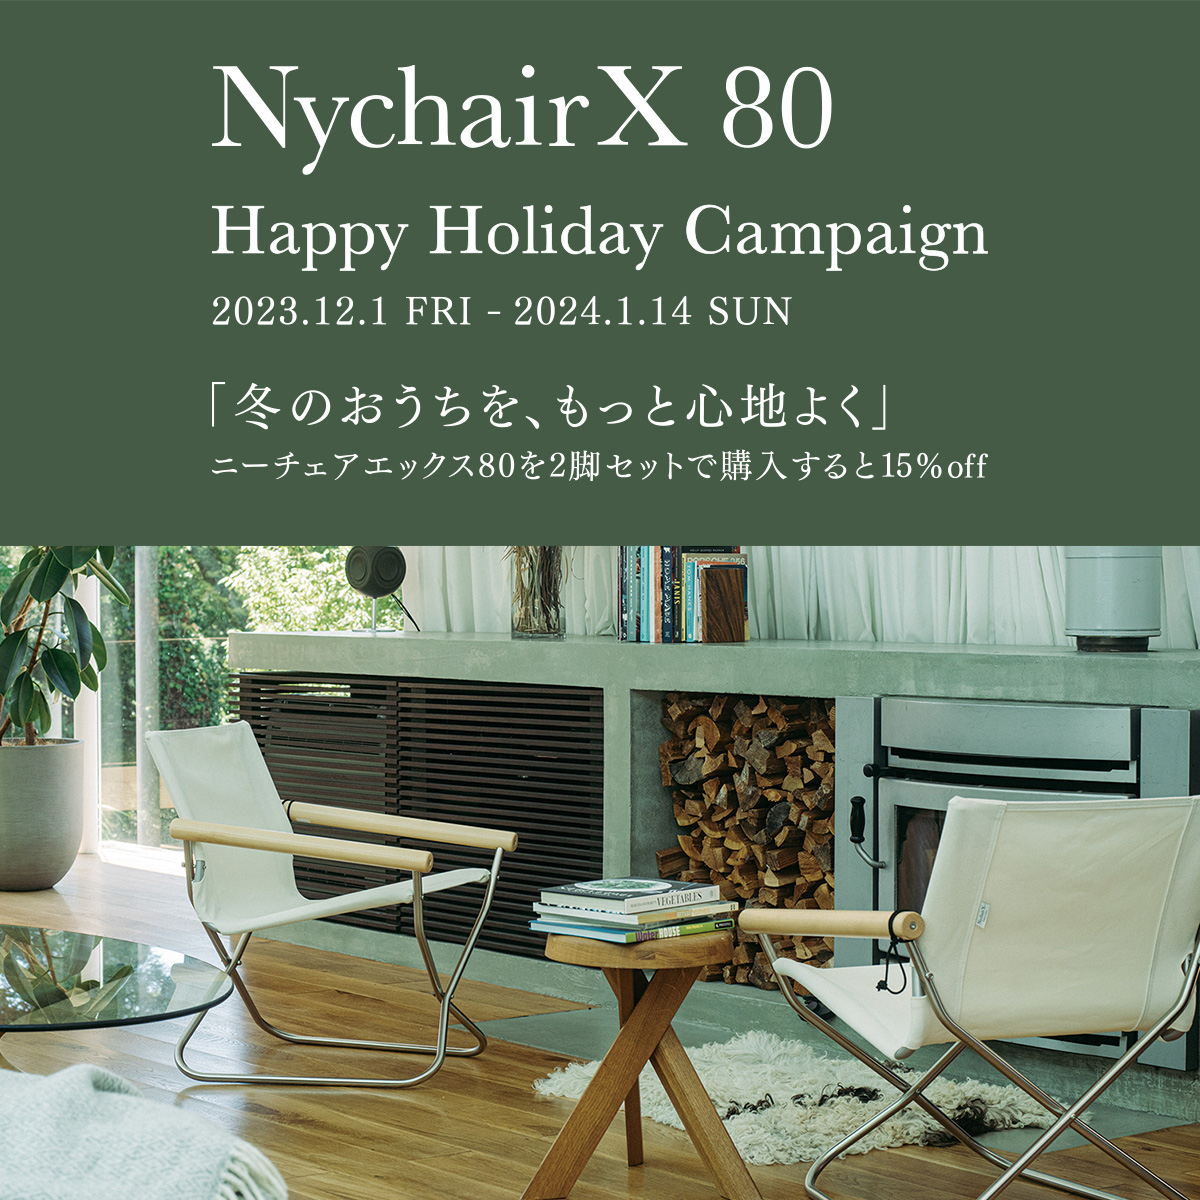 Nychair X 80 ハッピーホリデー キャンペーン 2脚セット購入で15%OFF